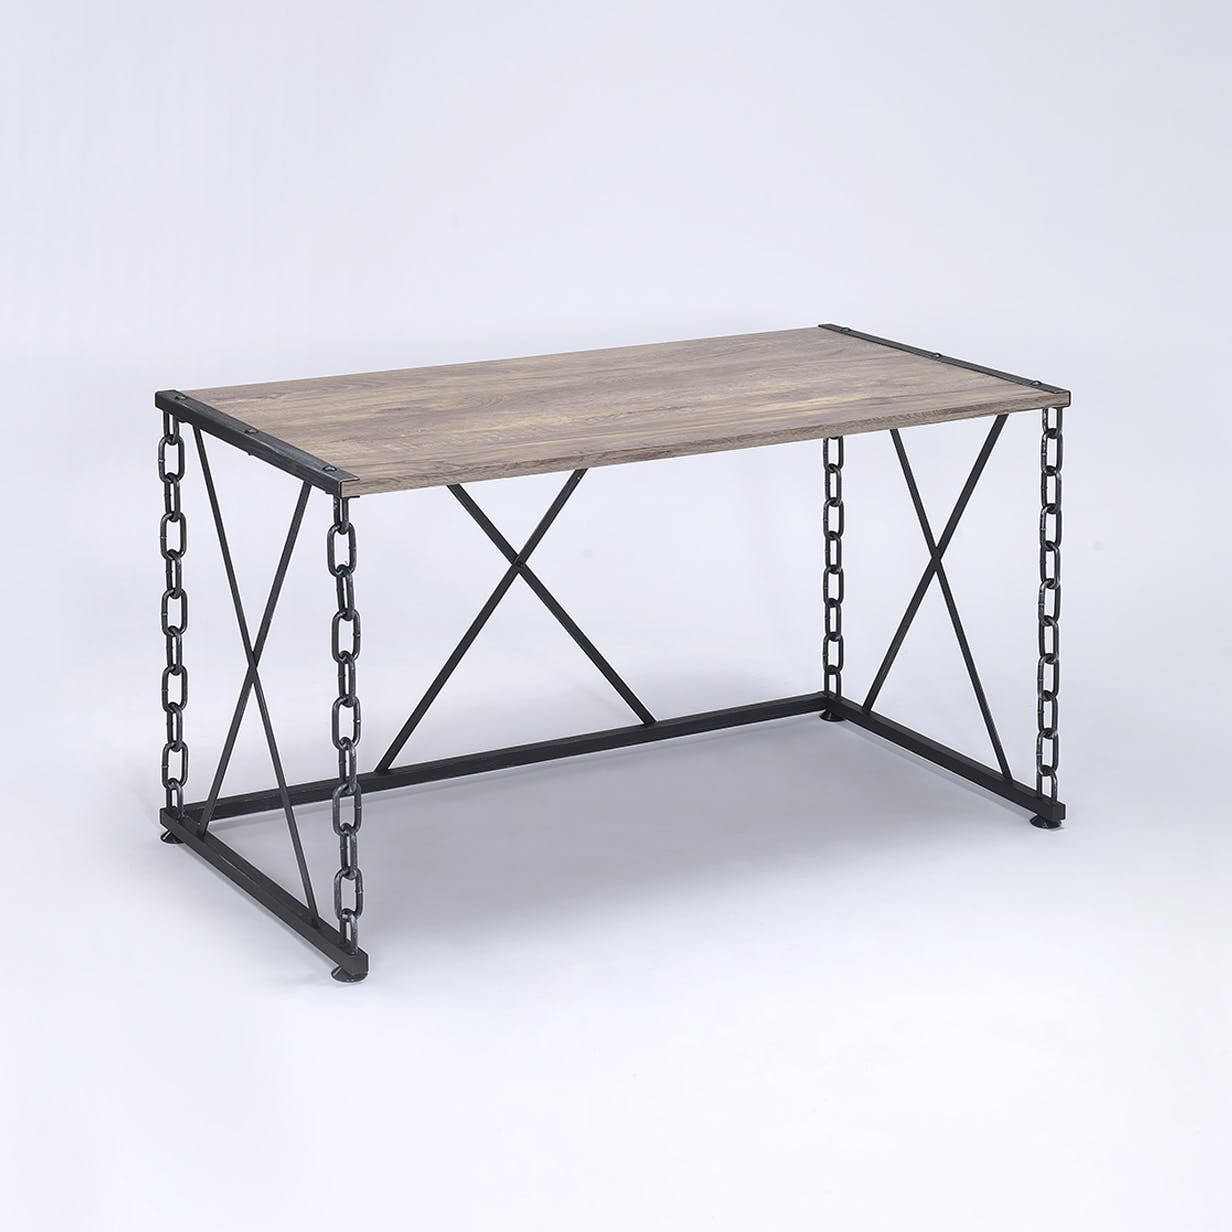 Bm177717 Wooden Desk With Metal X Frame, Rustic Oak Brown - 28 X 23.75 X 47.5 In.